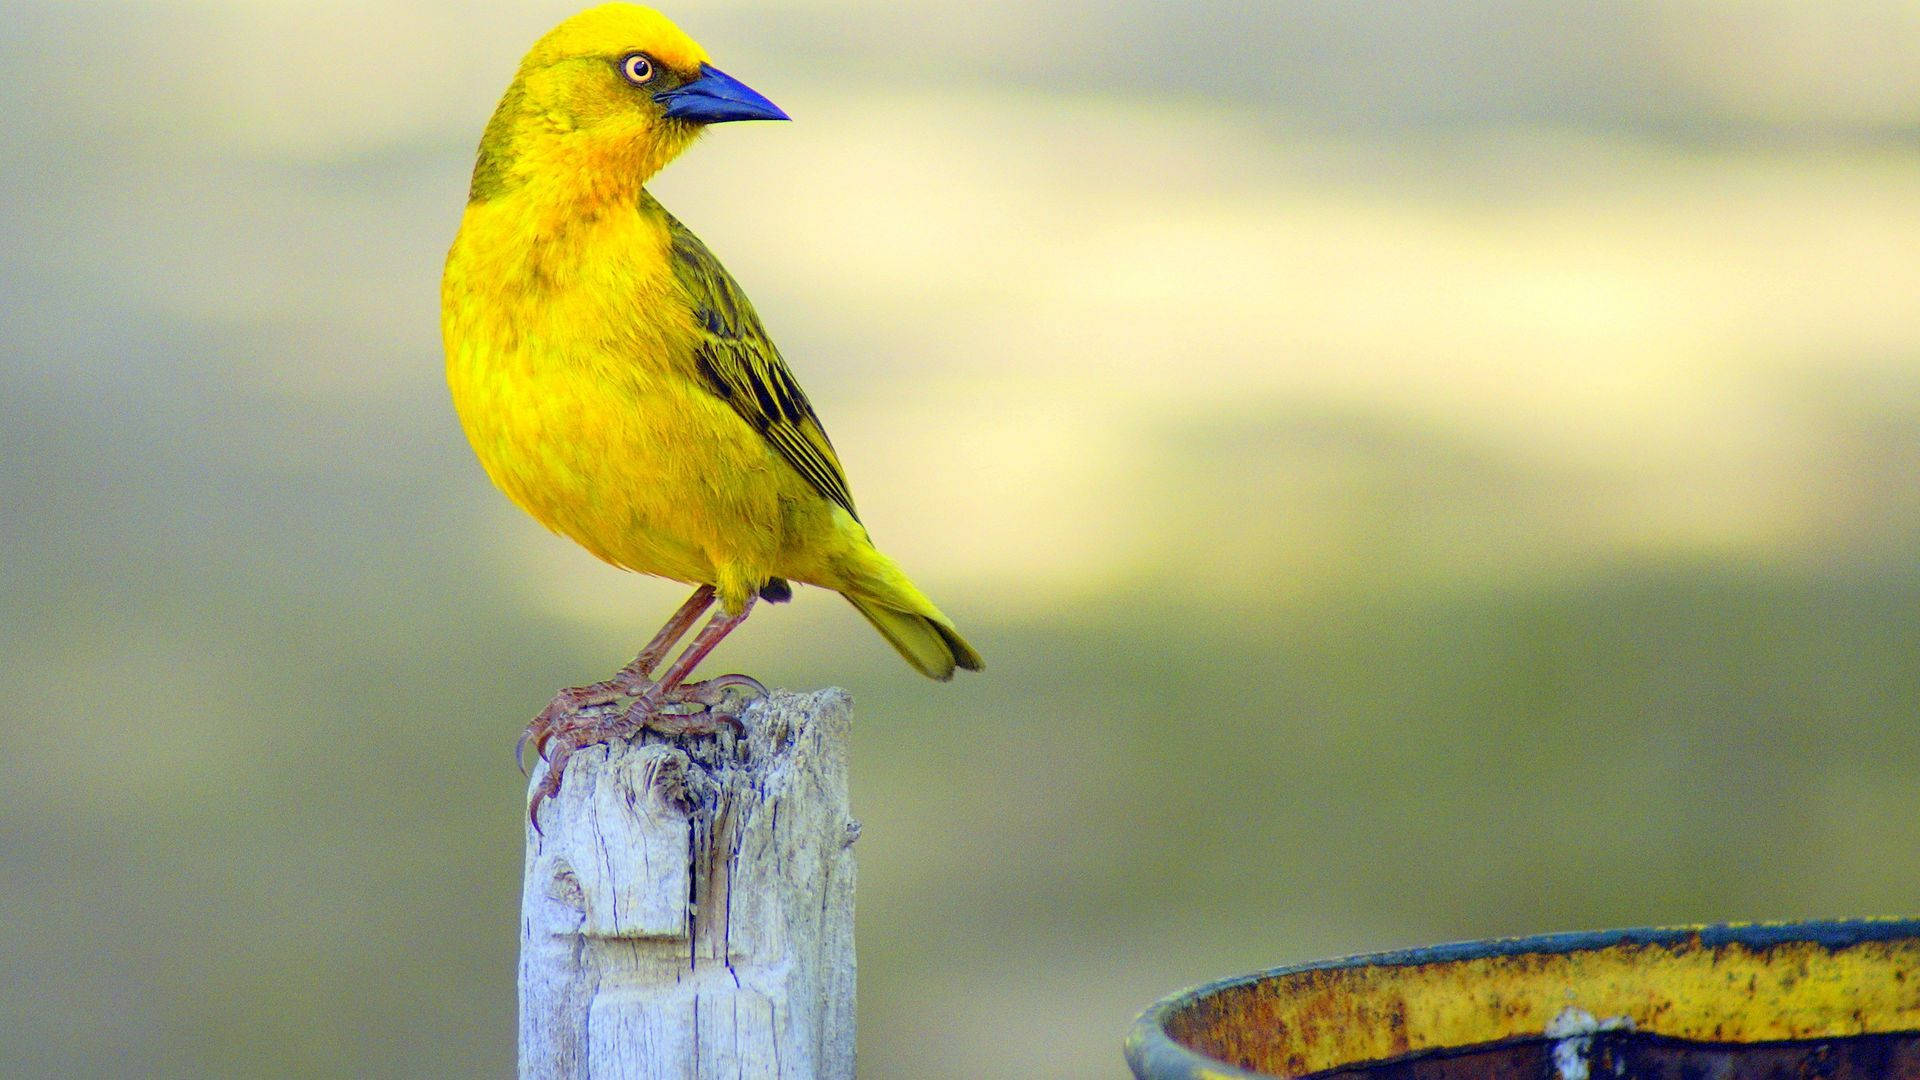 Vibrant Yellow Bird With Blue Beak Background